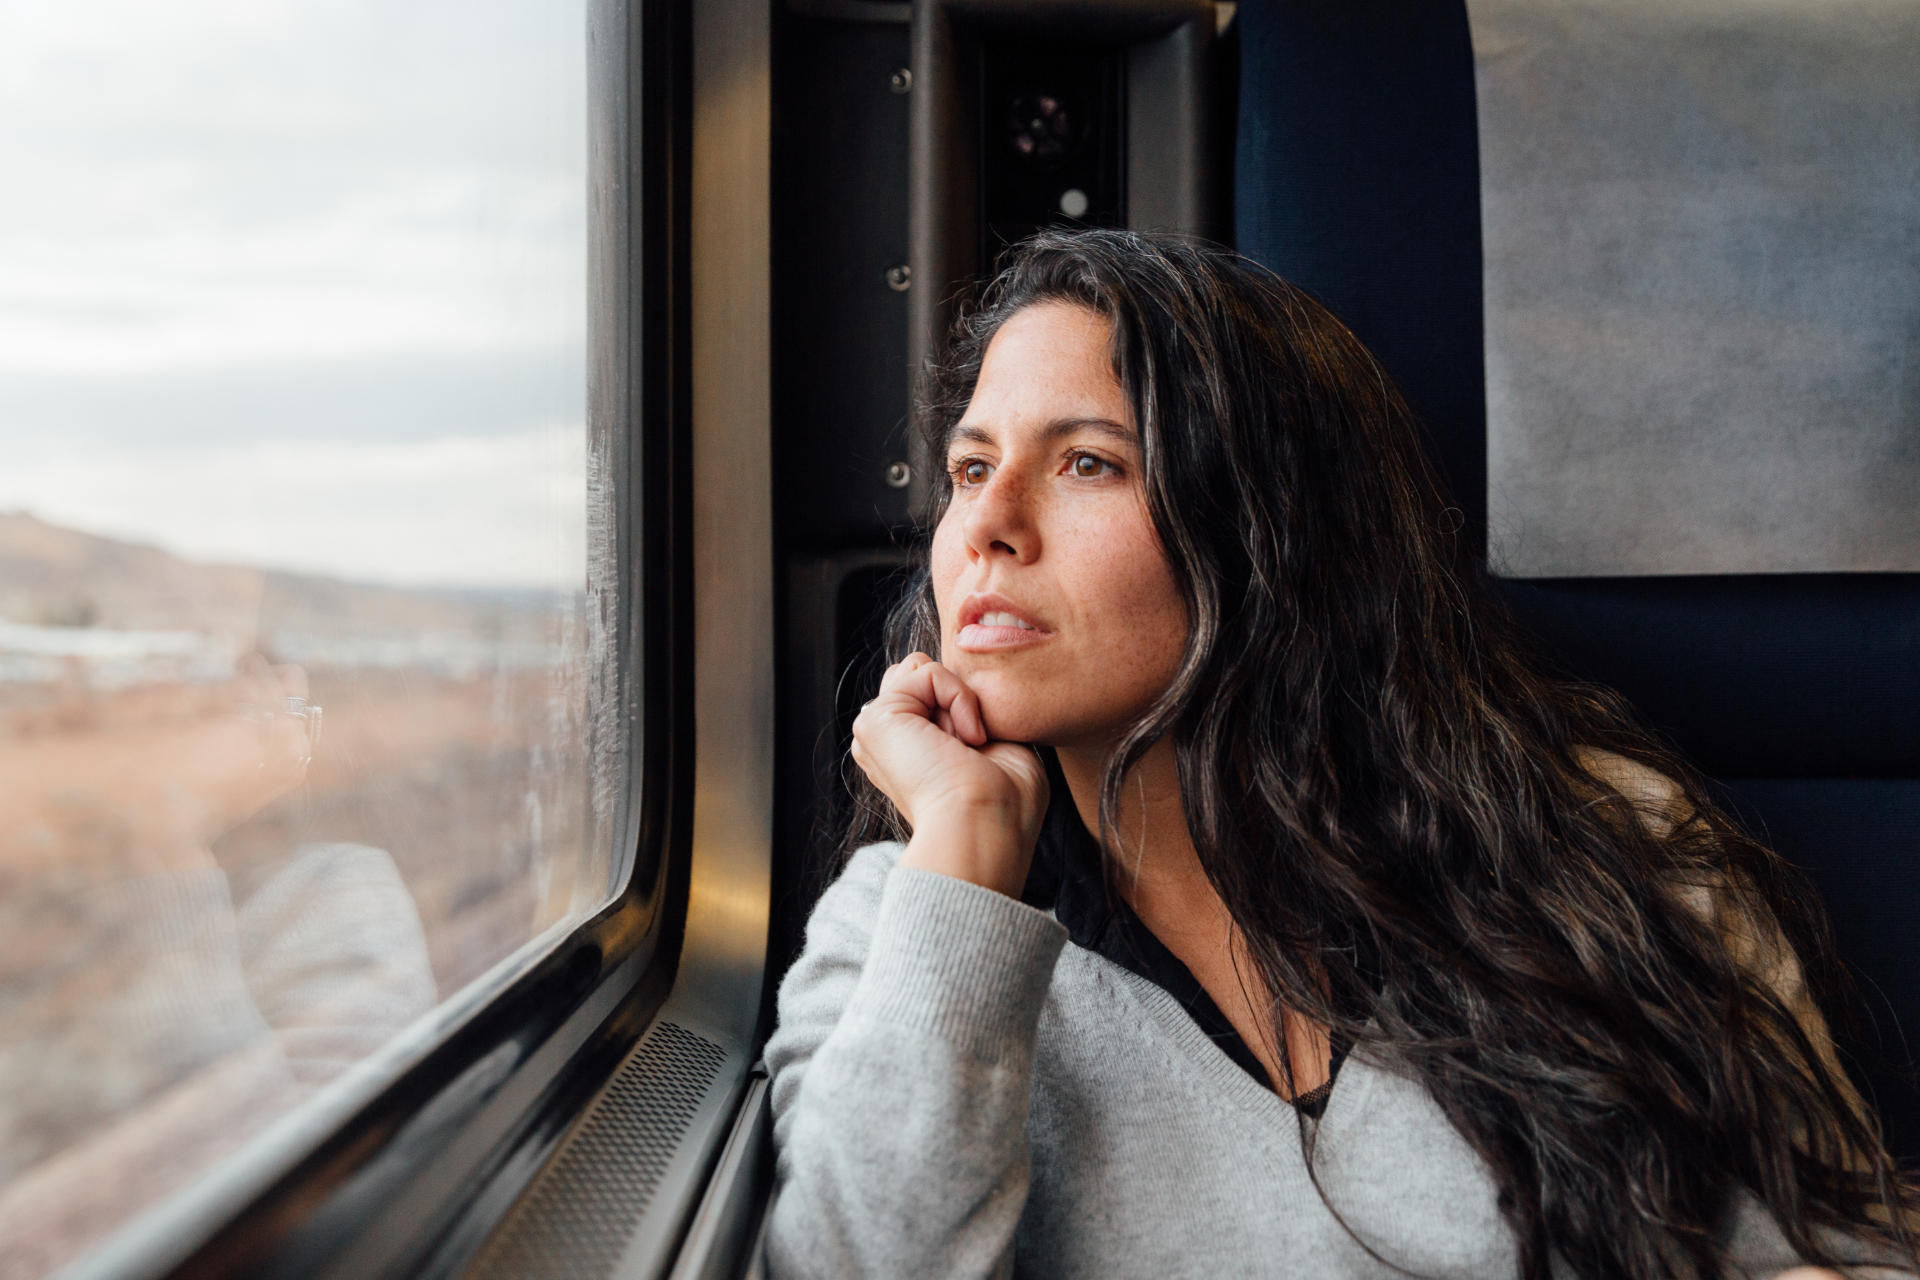 Woman looking out train window